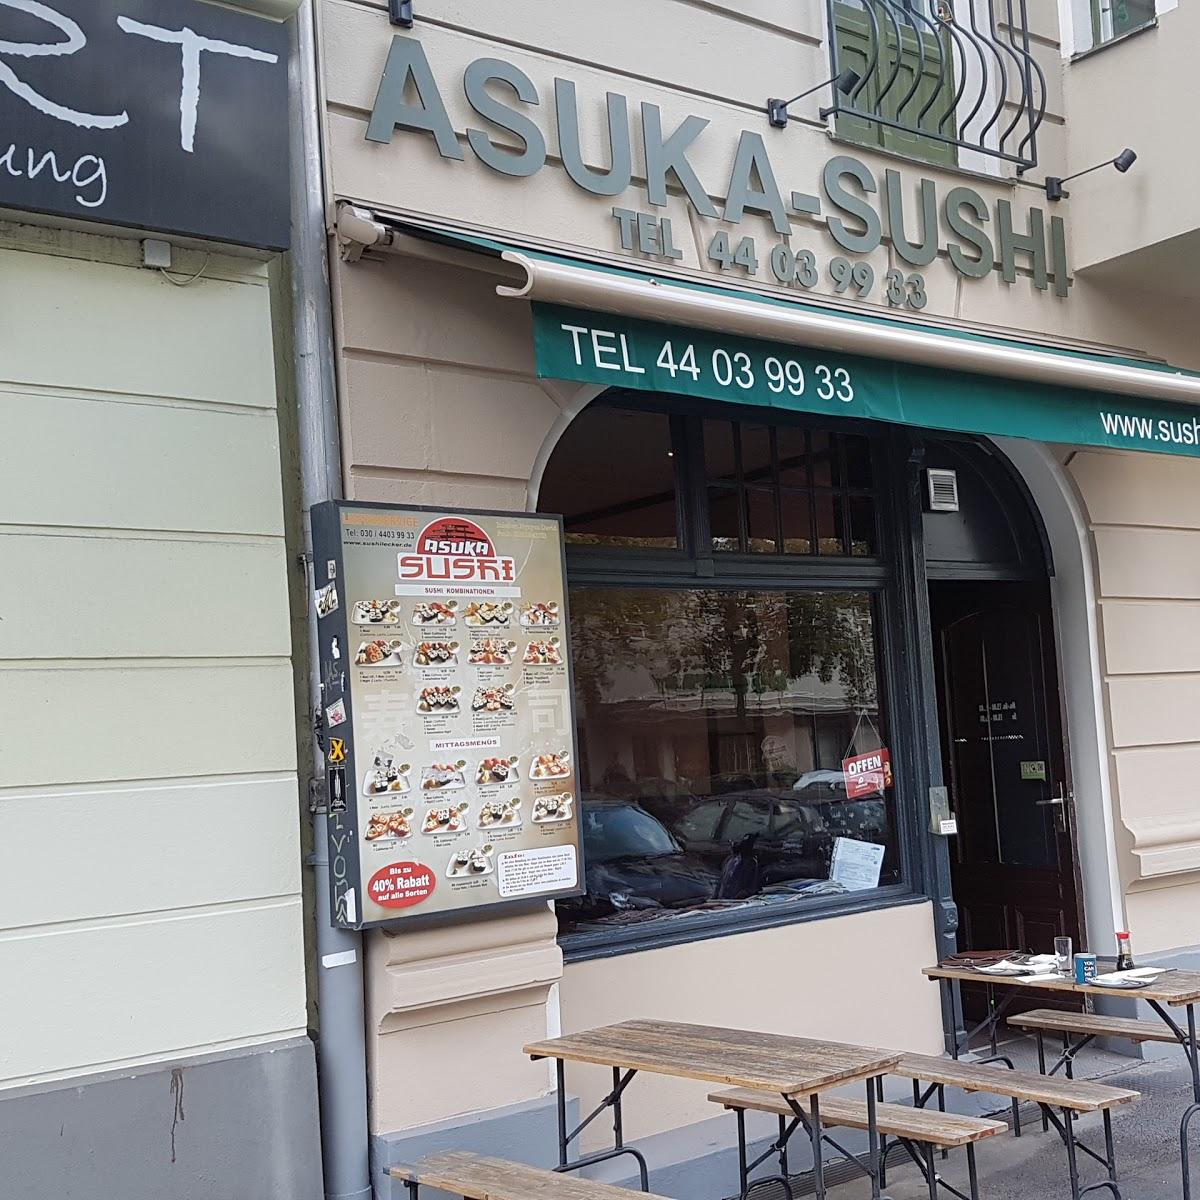 Restaurant "Asuka-Sushi" in Berlin